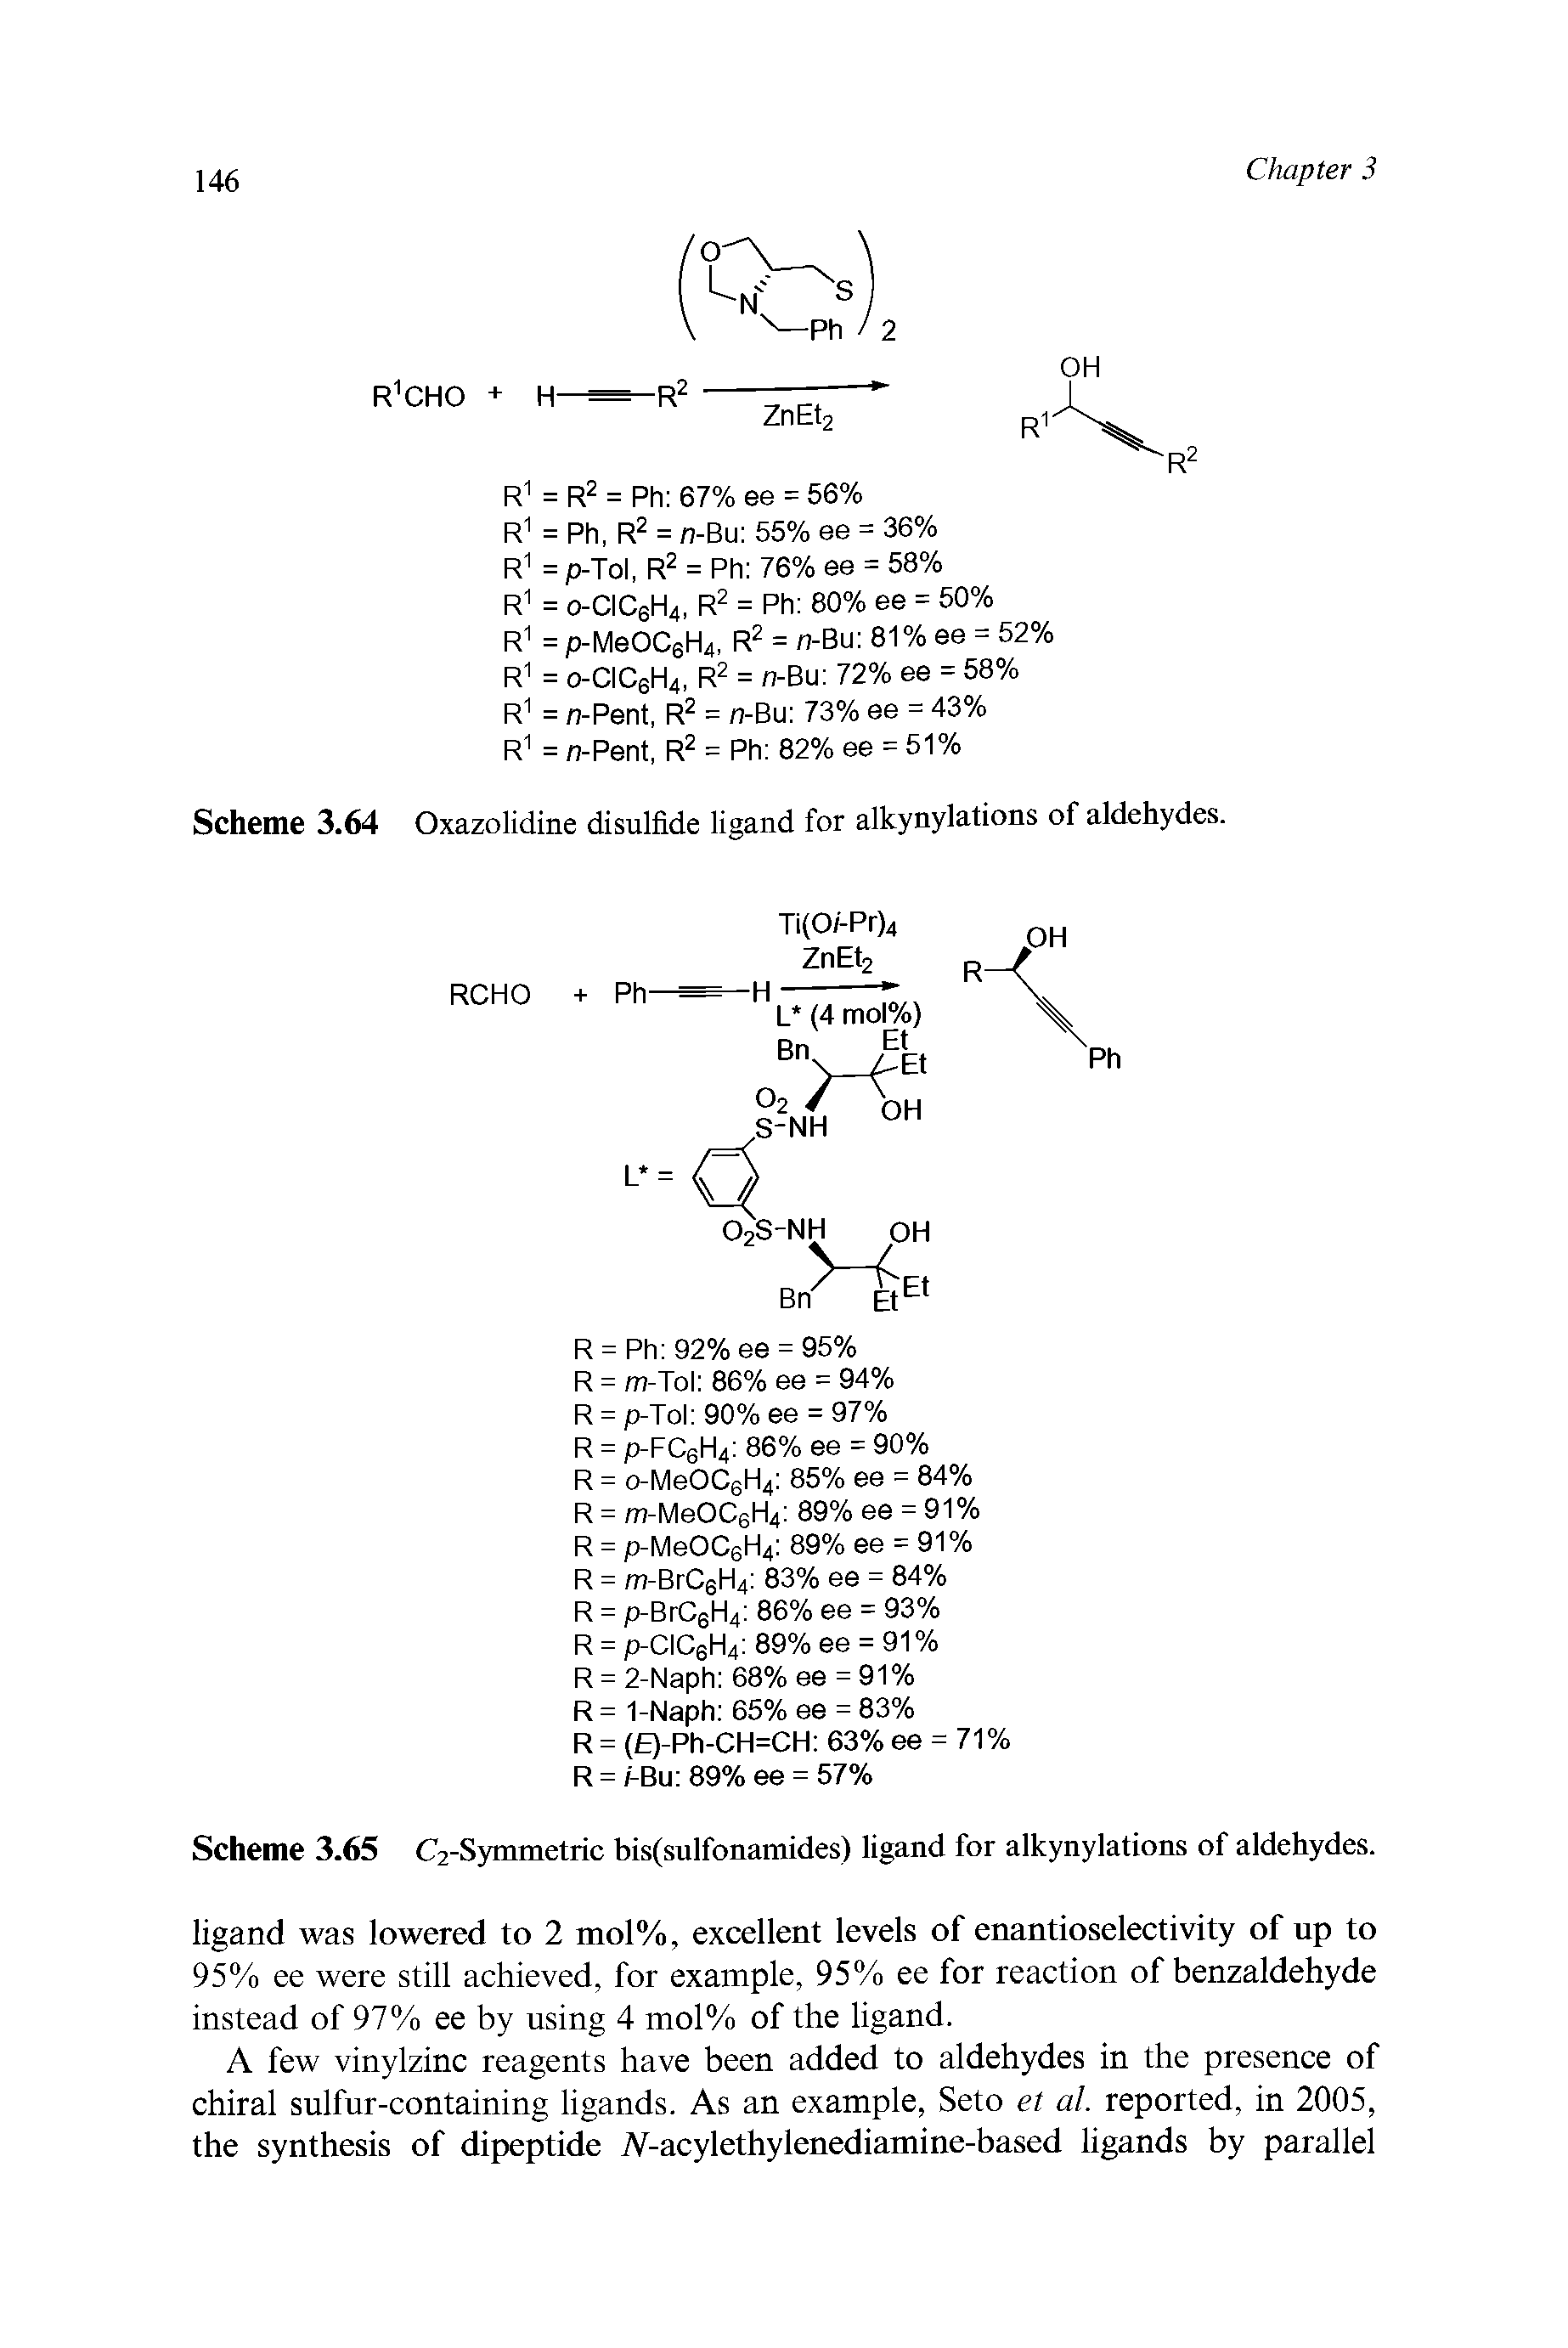 Scheme 3.64 Oxazolidine disulfide ligand for alkynylations of aldehydes.